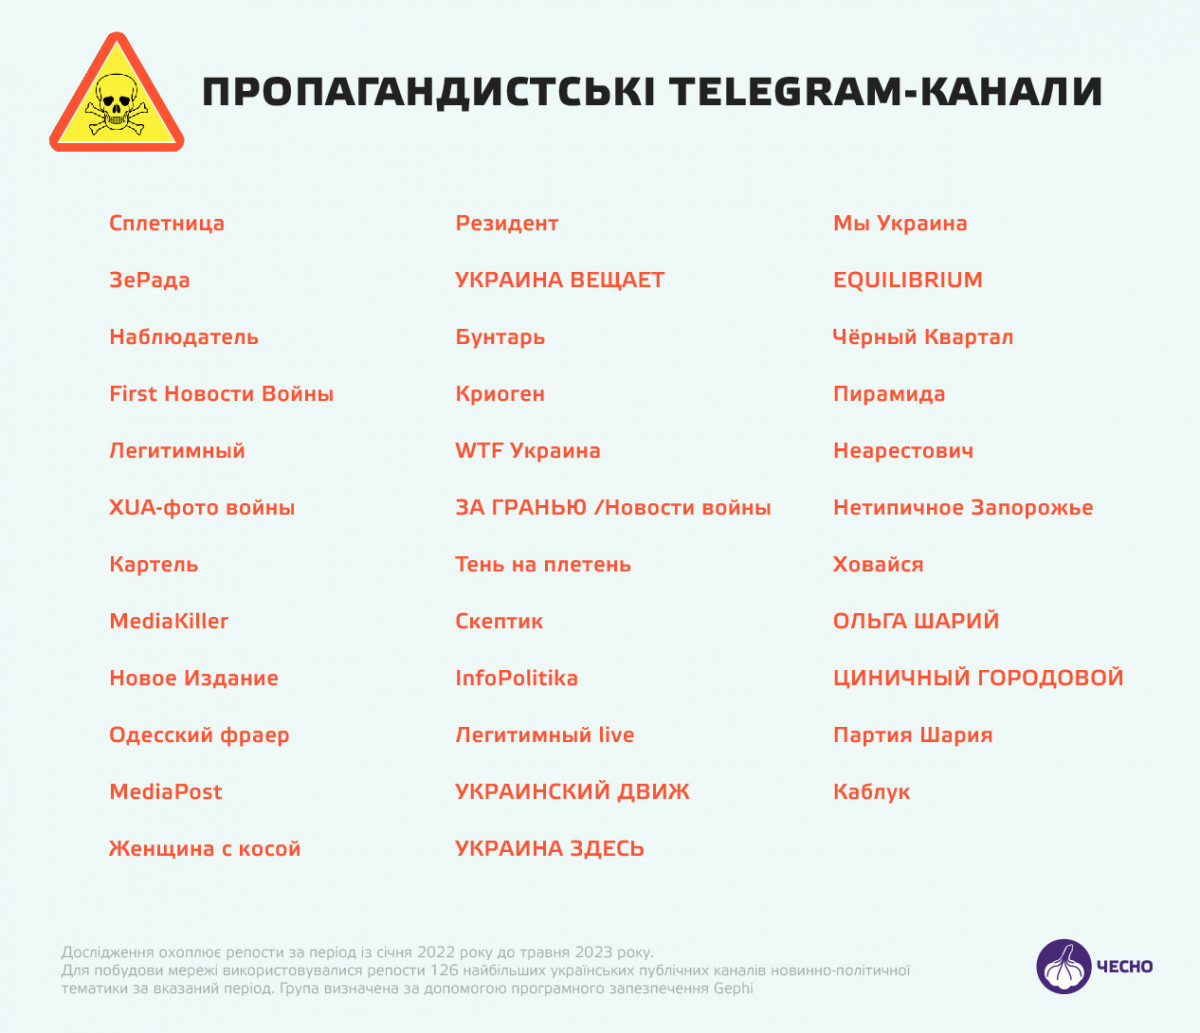 Перевести телеграмма на русский язык фото 64